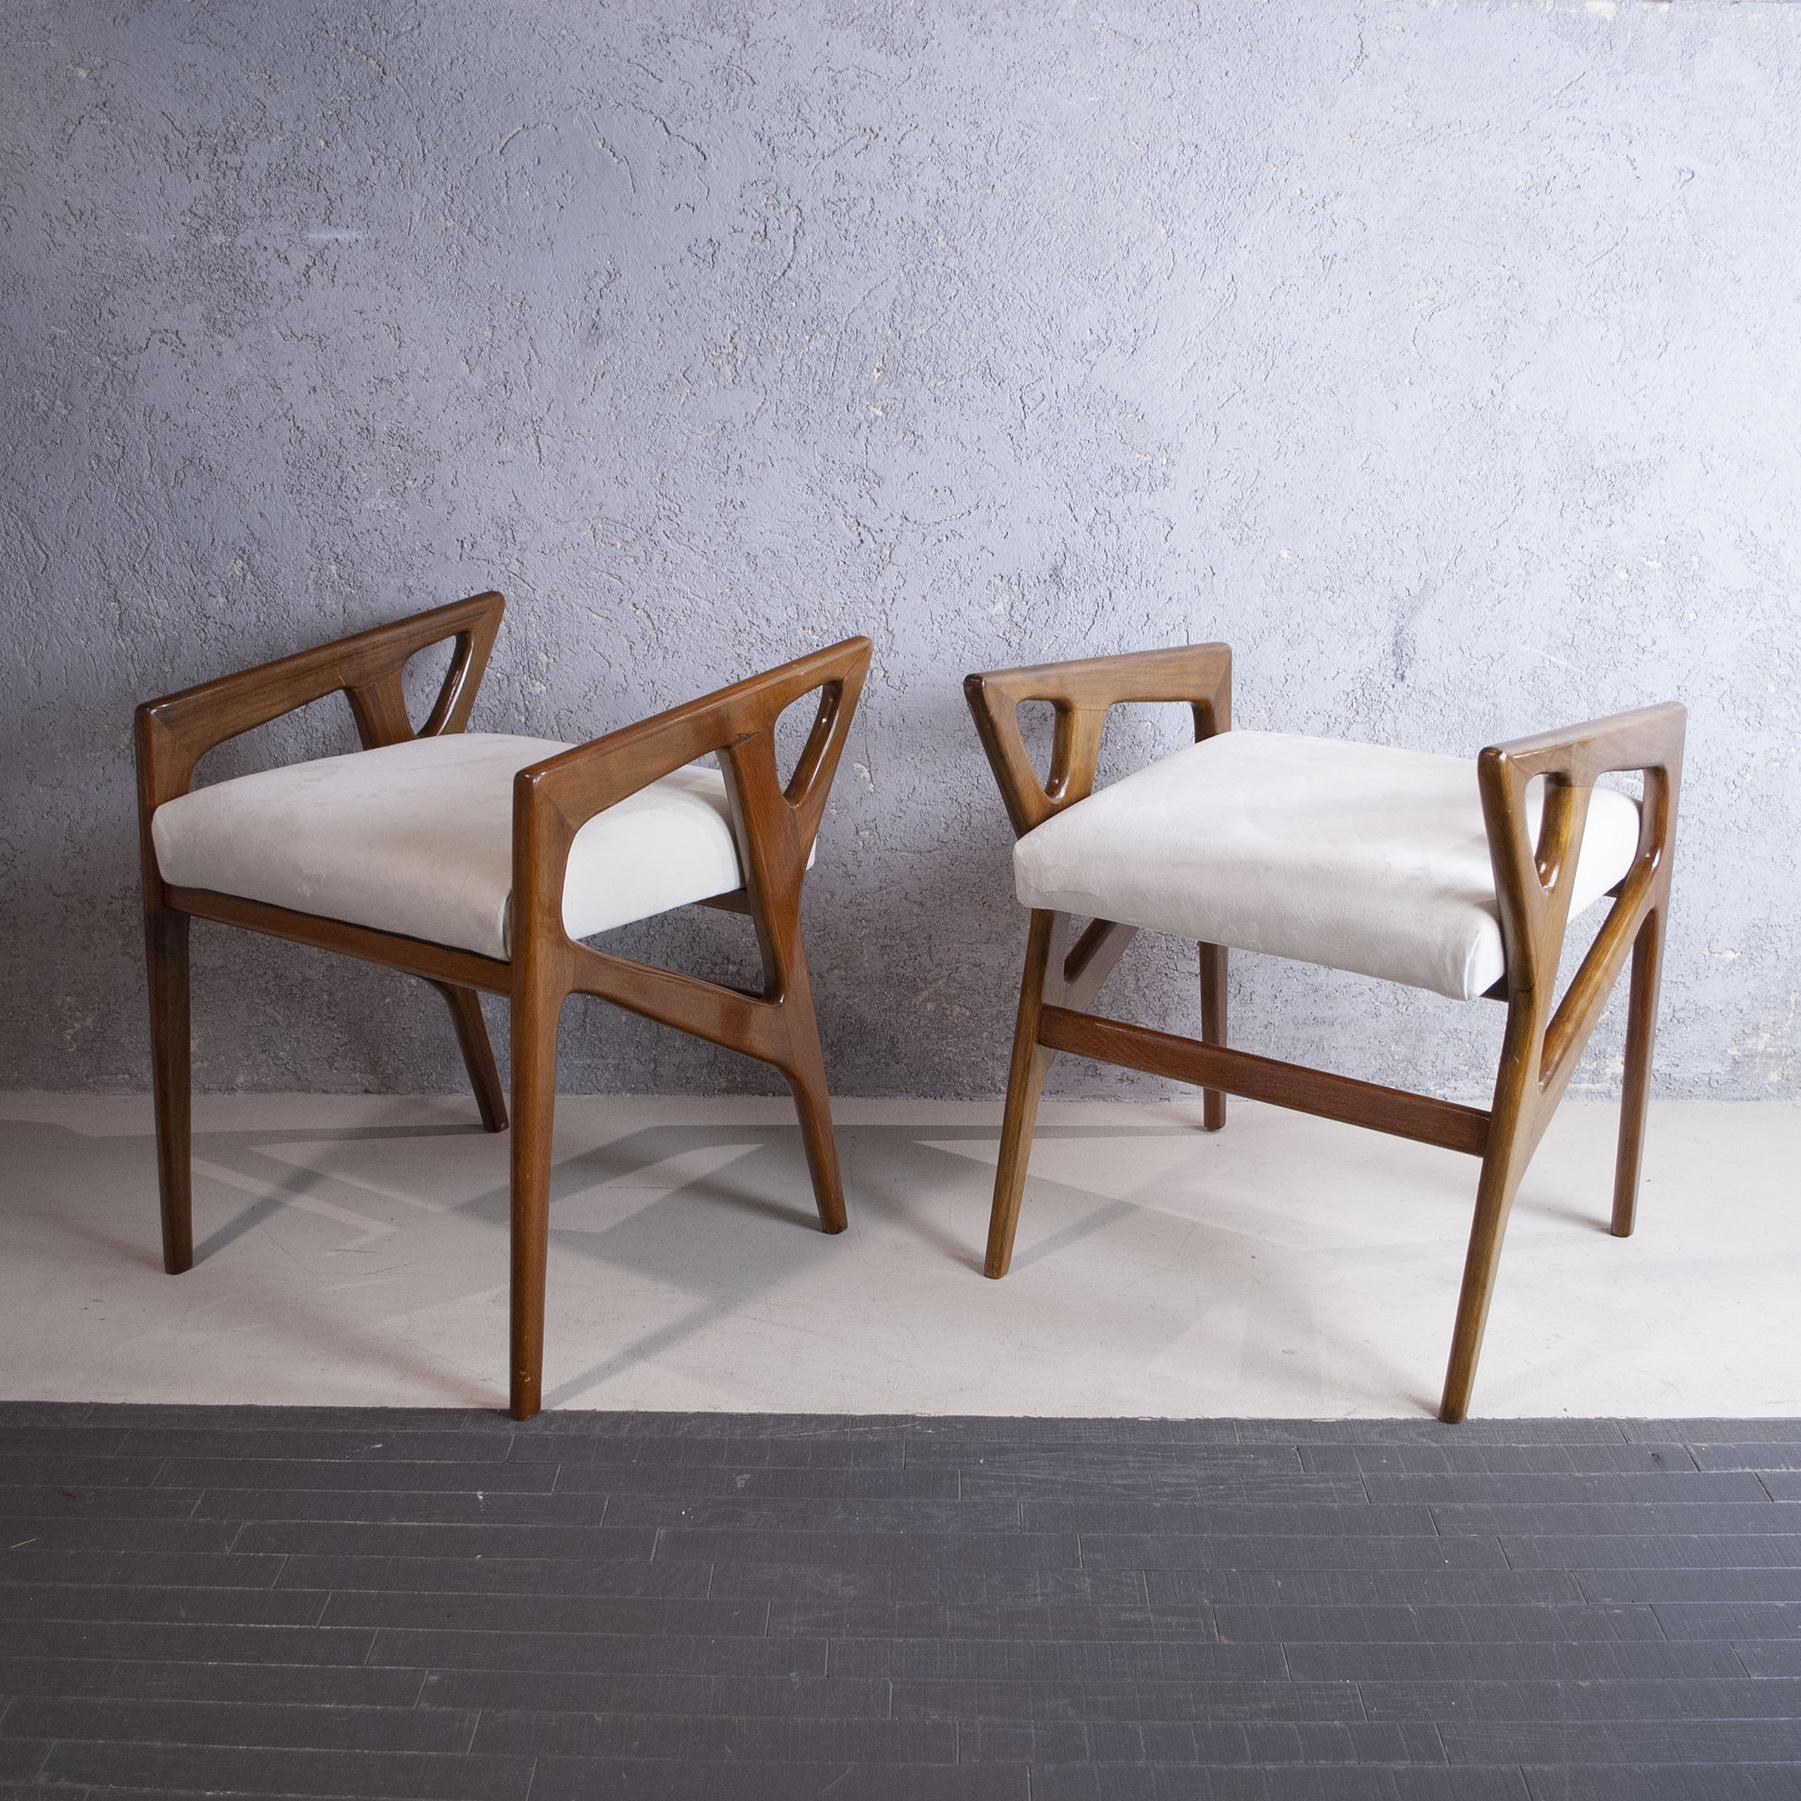 Italian Gio Ponti italian midcentury pair of wooden stools 1950s for Cassina